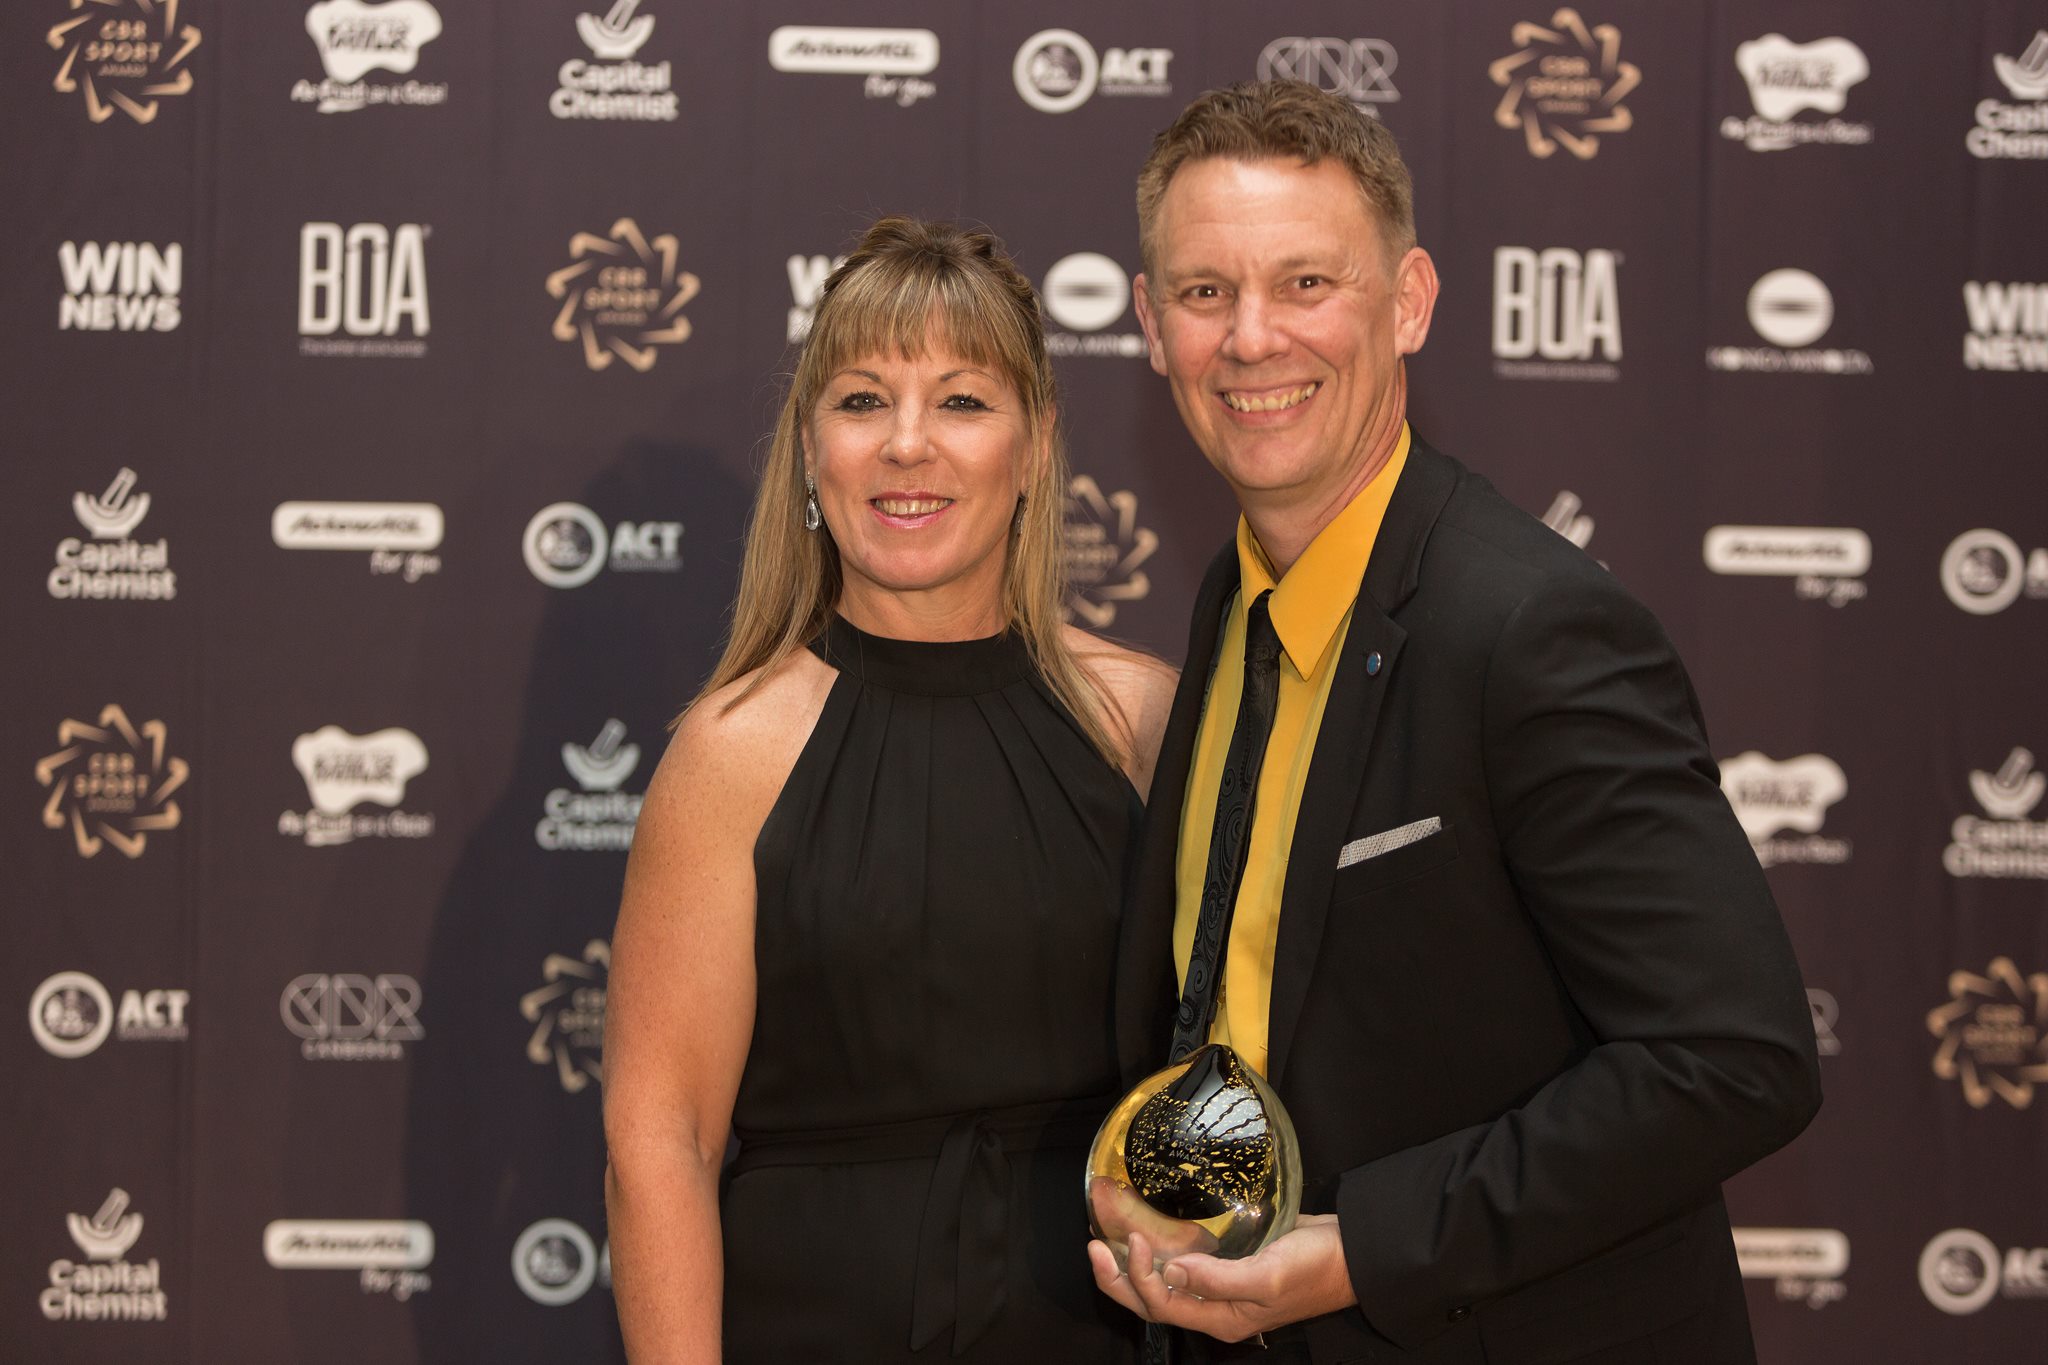 Canberra Sprint Coach, Steve Dodt, award winner